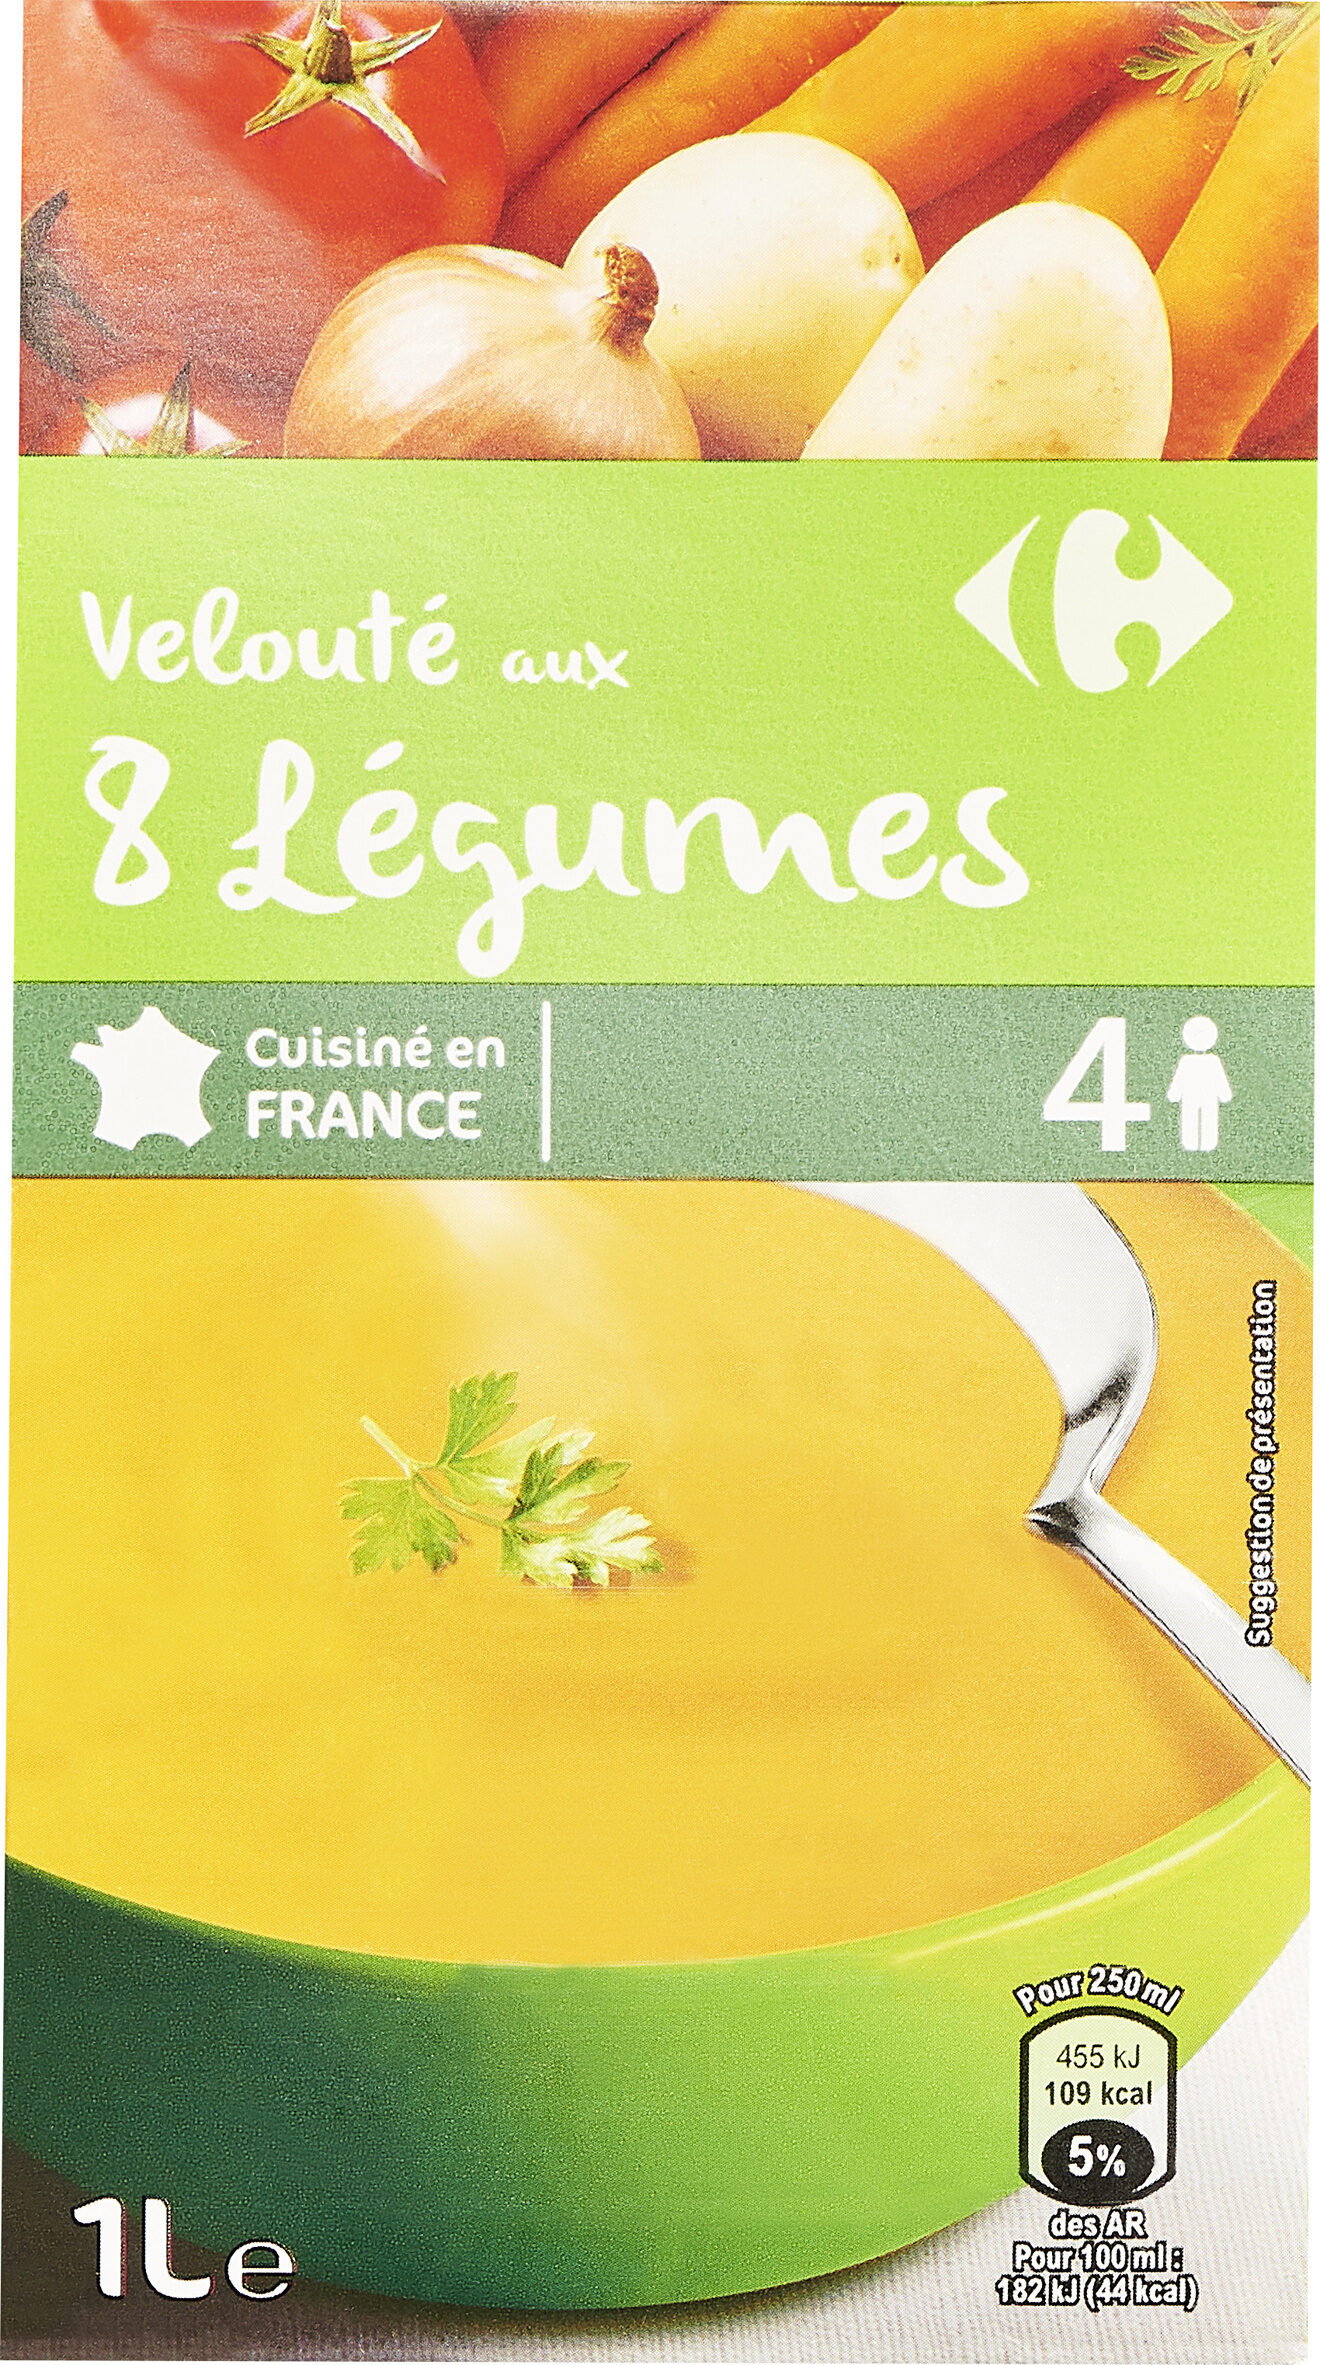 Veloute 8 legumes - Prodotto - fr